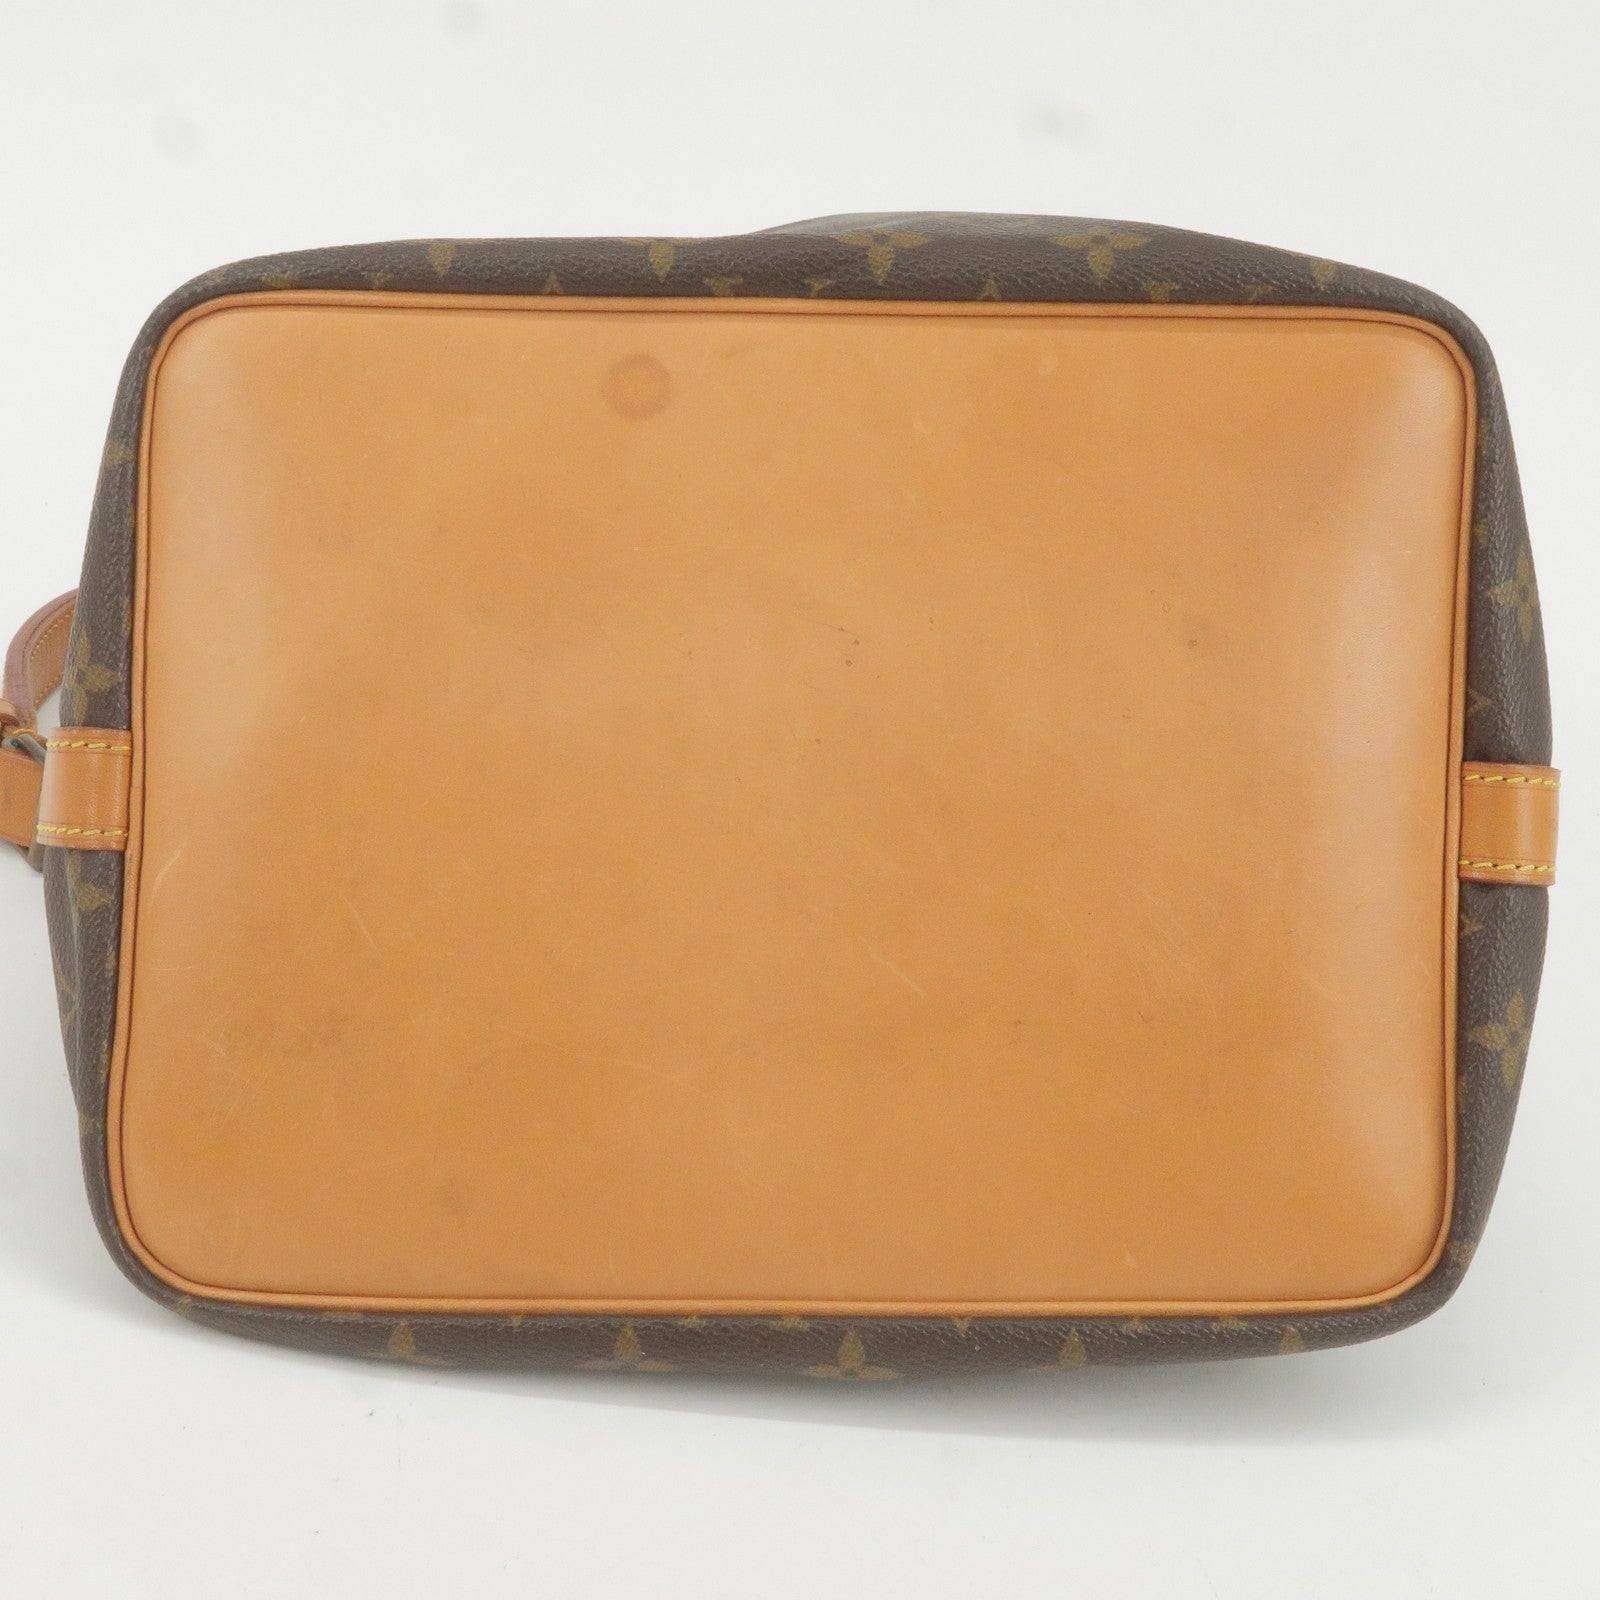 Louis Vuitton Adele in Monogram Handbag - Authentic Pre-Owned Designer Handbags